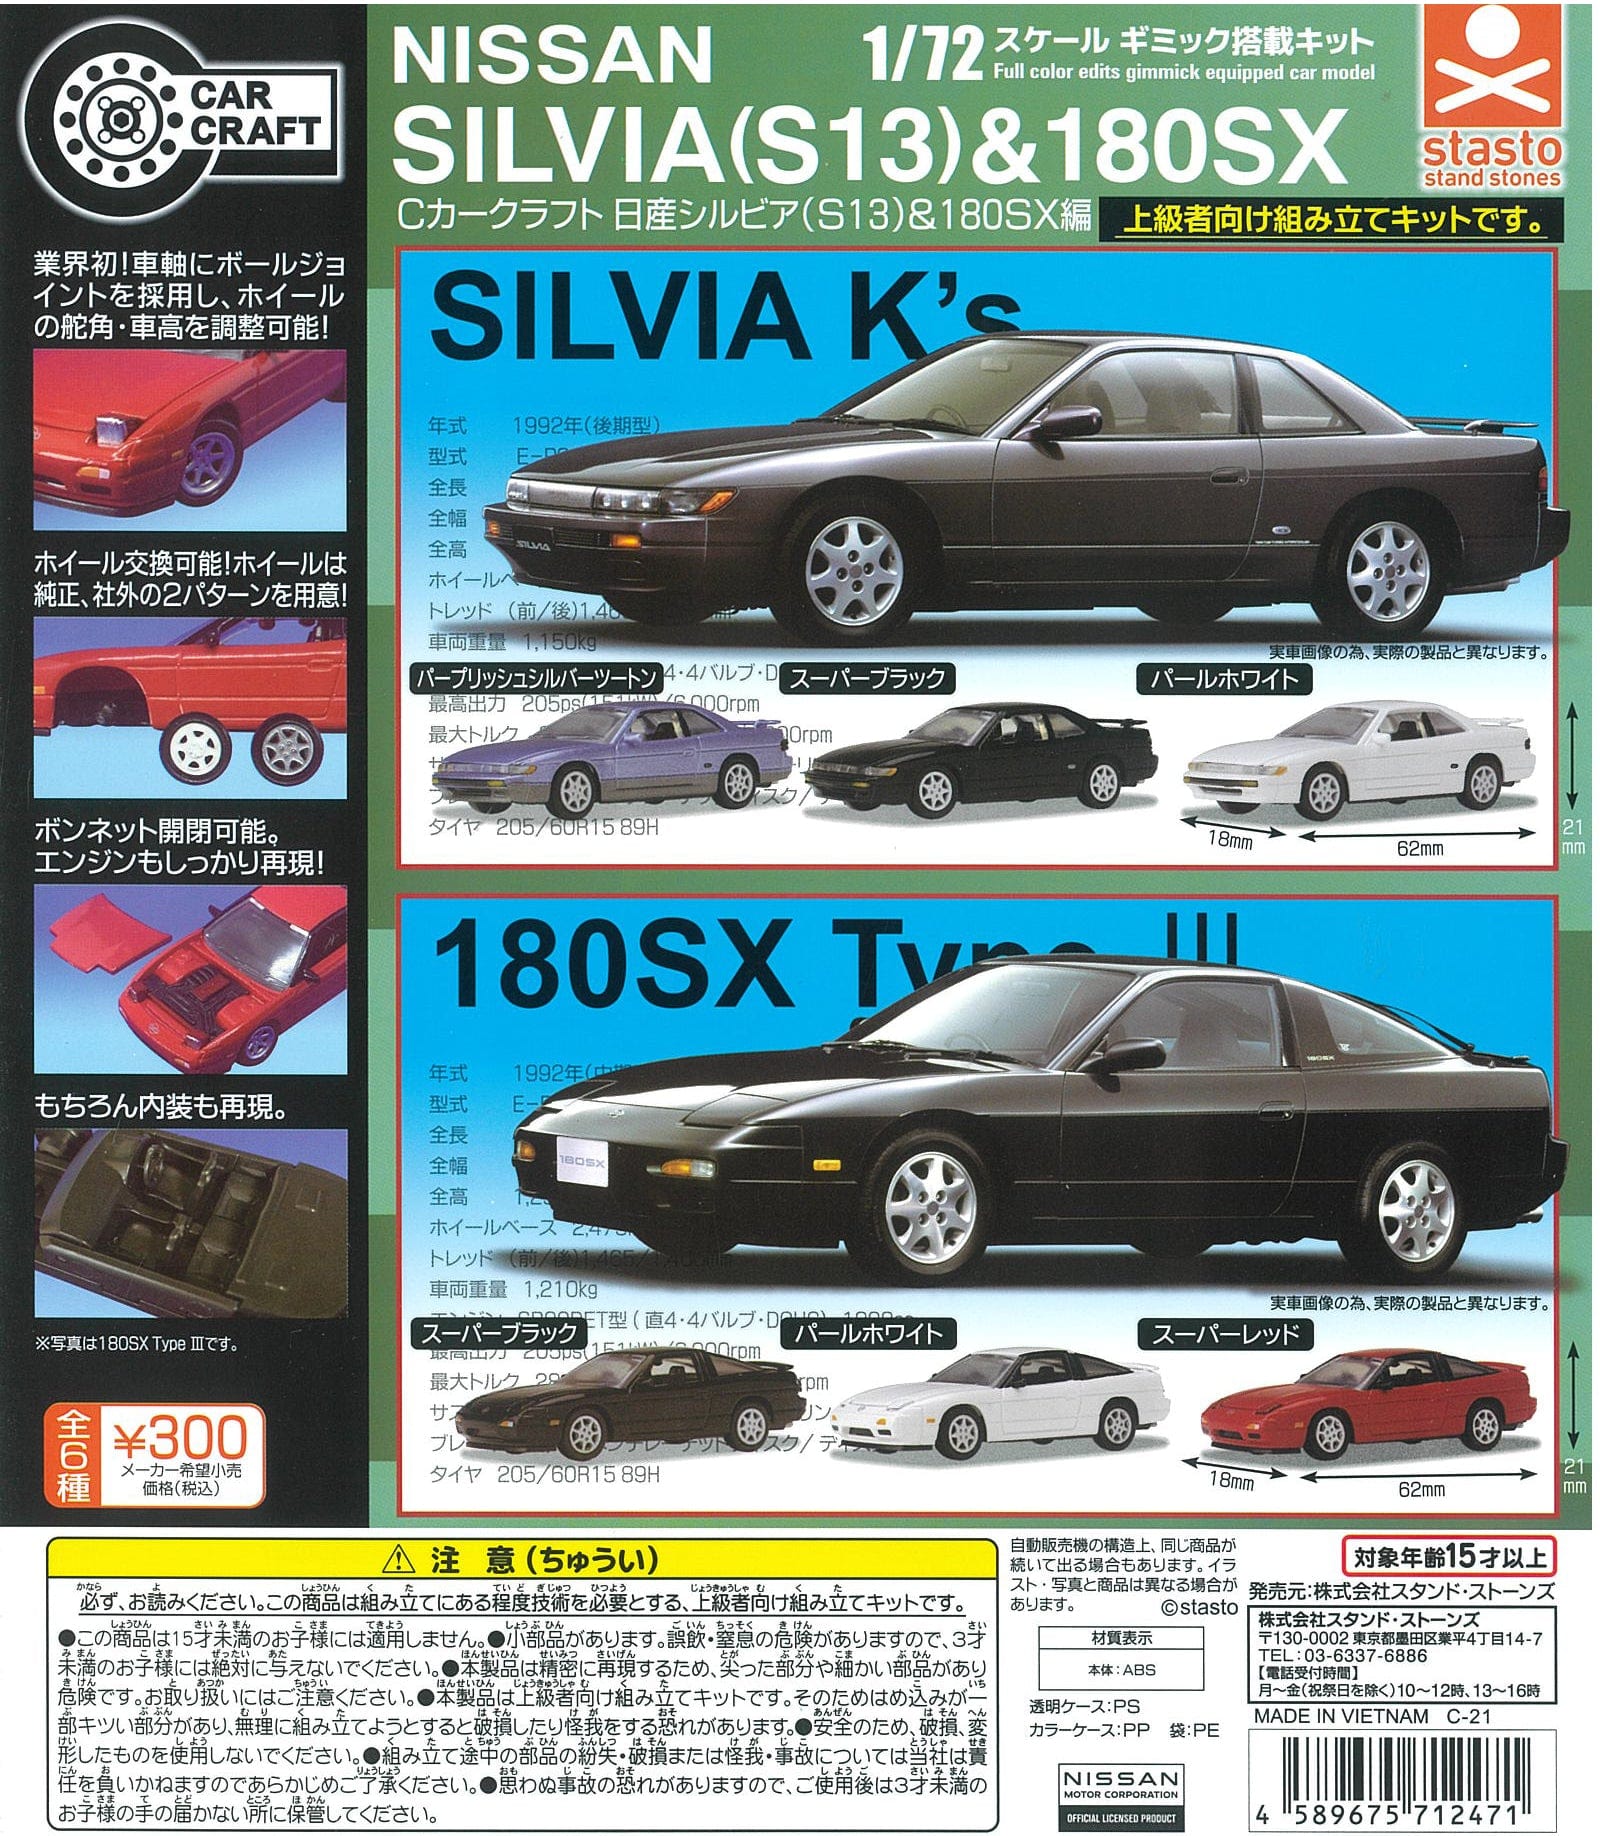 Stasto Stand Stone CP1210 C Car Craft Nissan Silvia (S13) & 180SX Ver.